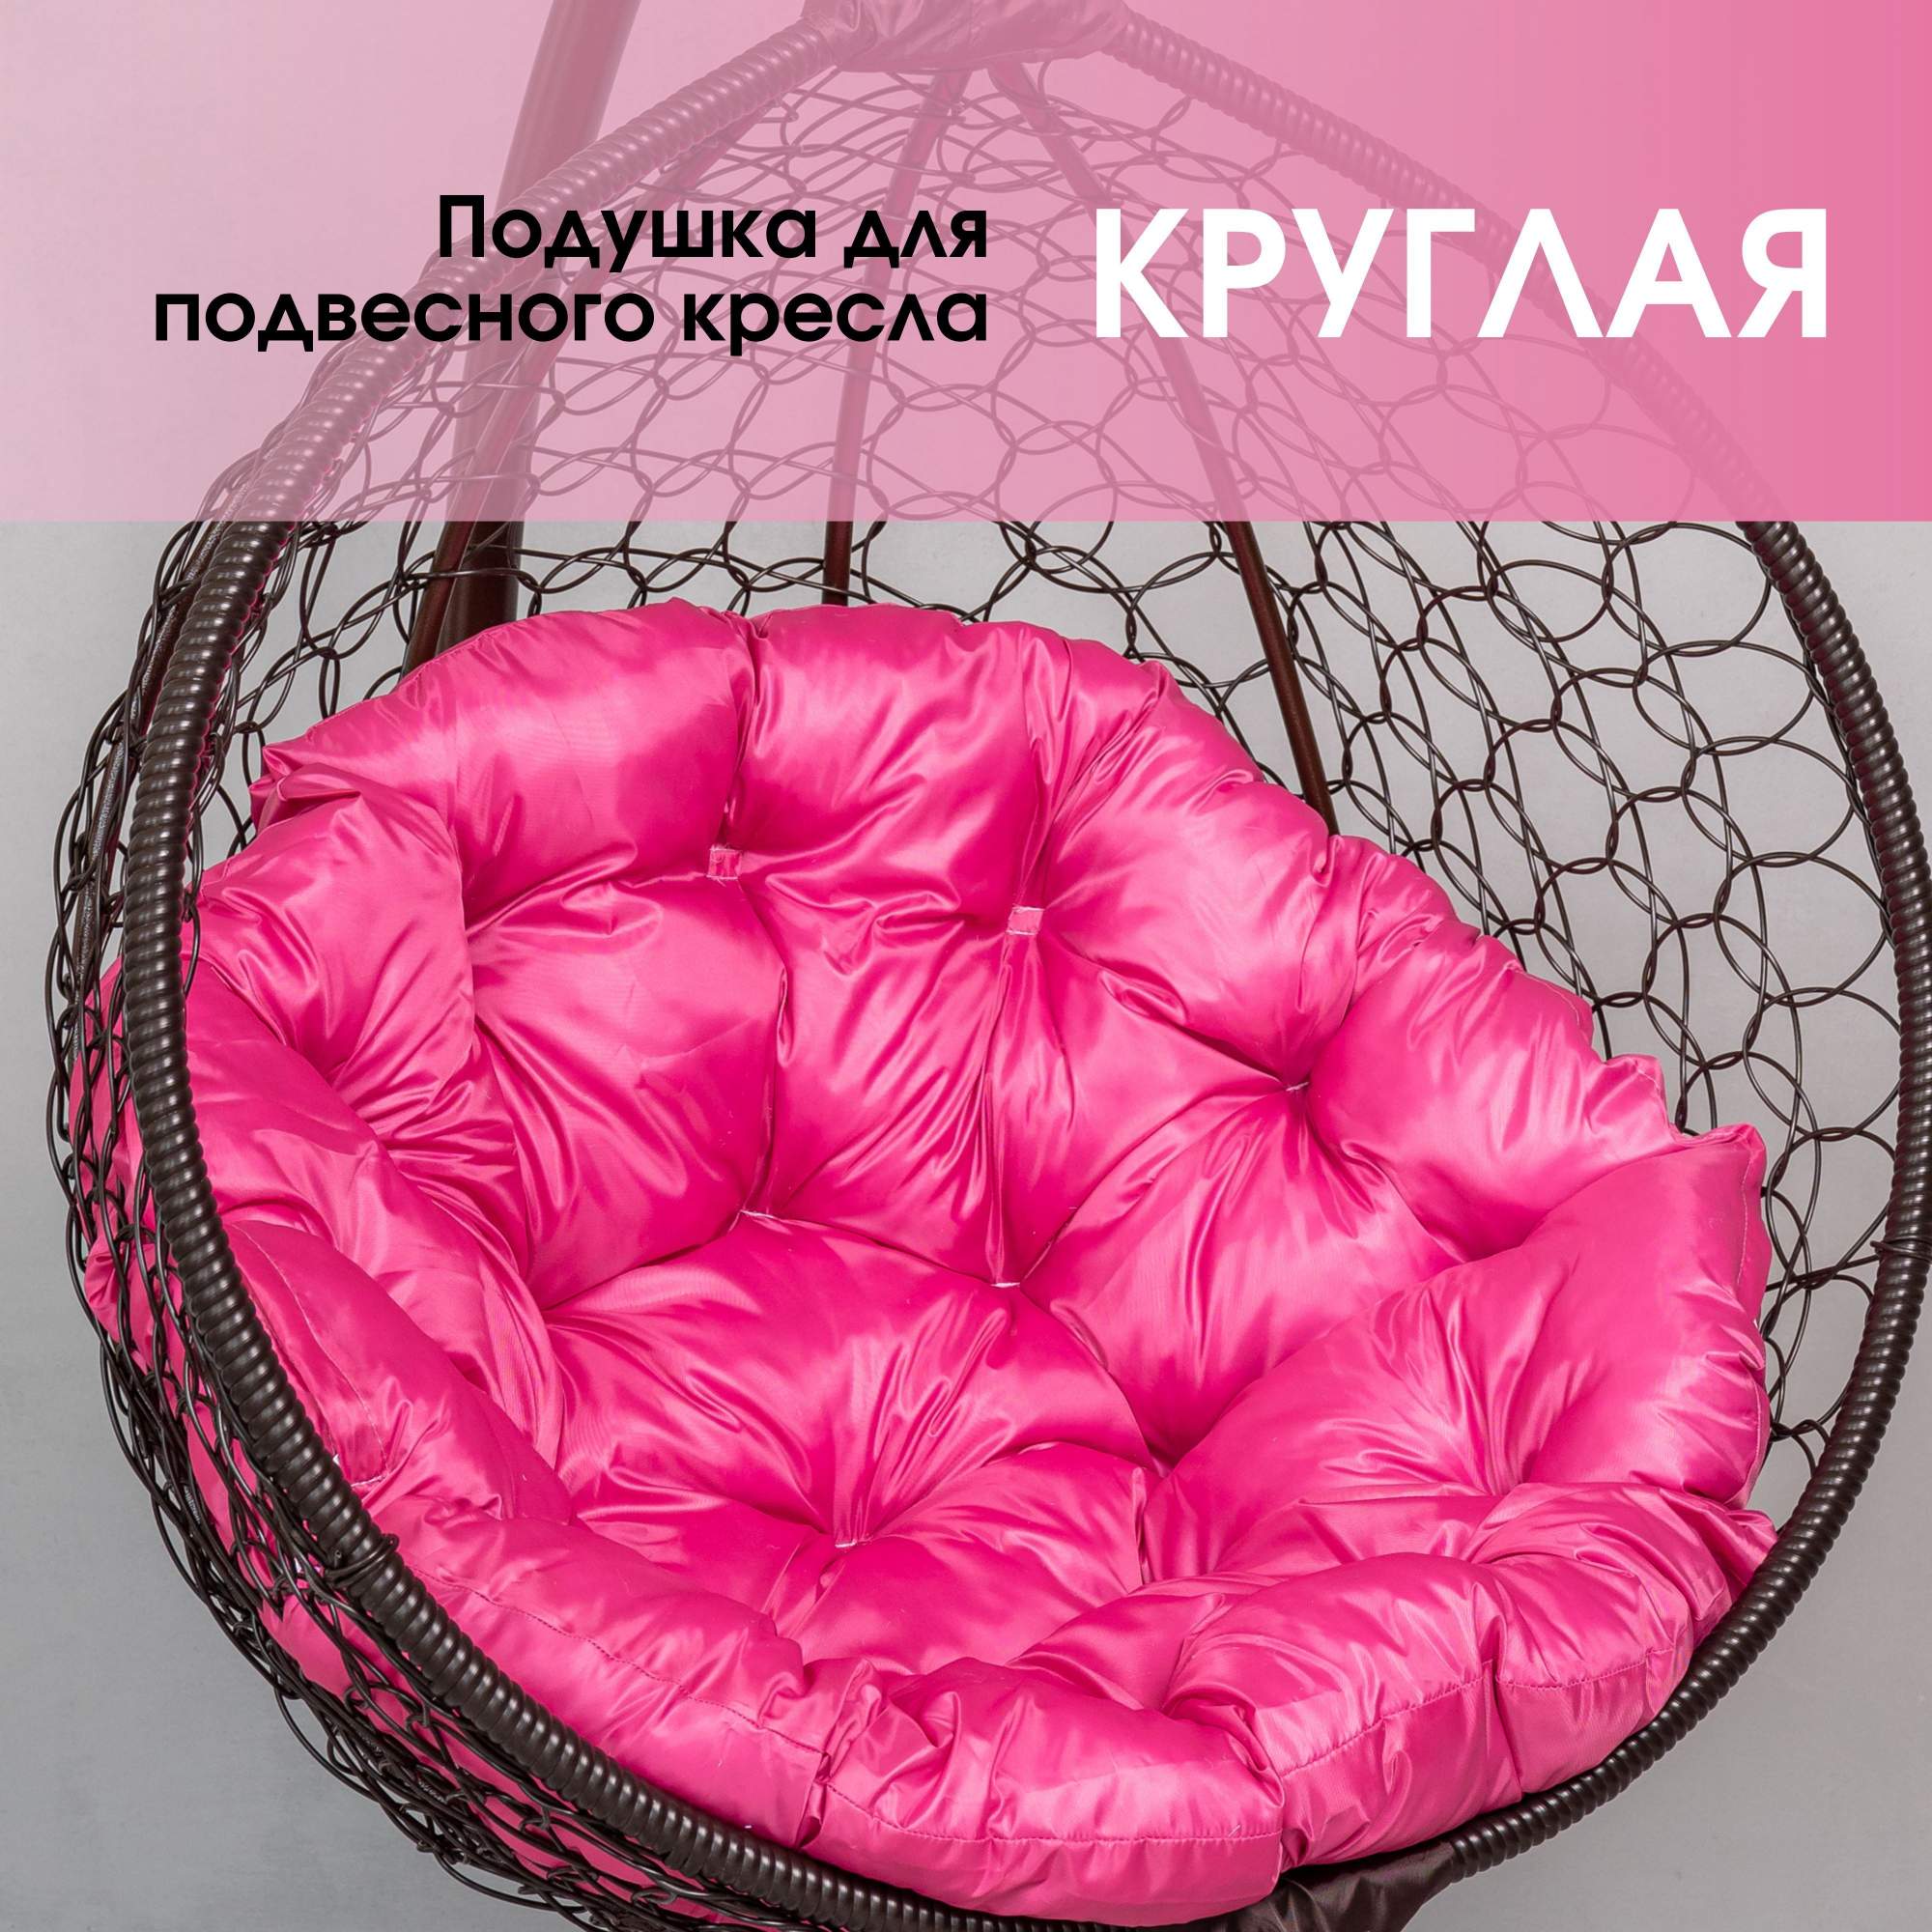 Подушка для садовой мебели STULER Круг 100x100x10 розовая круглая 4-KI